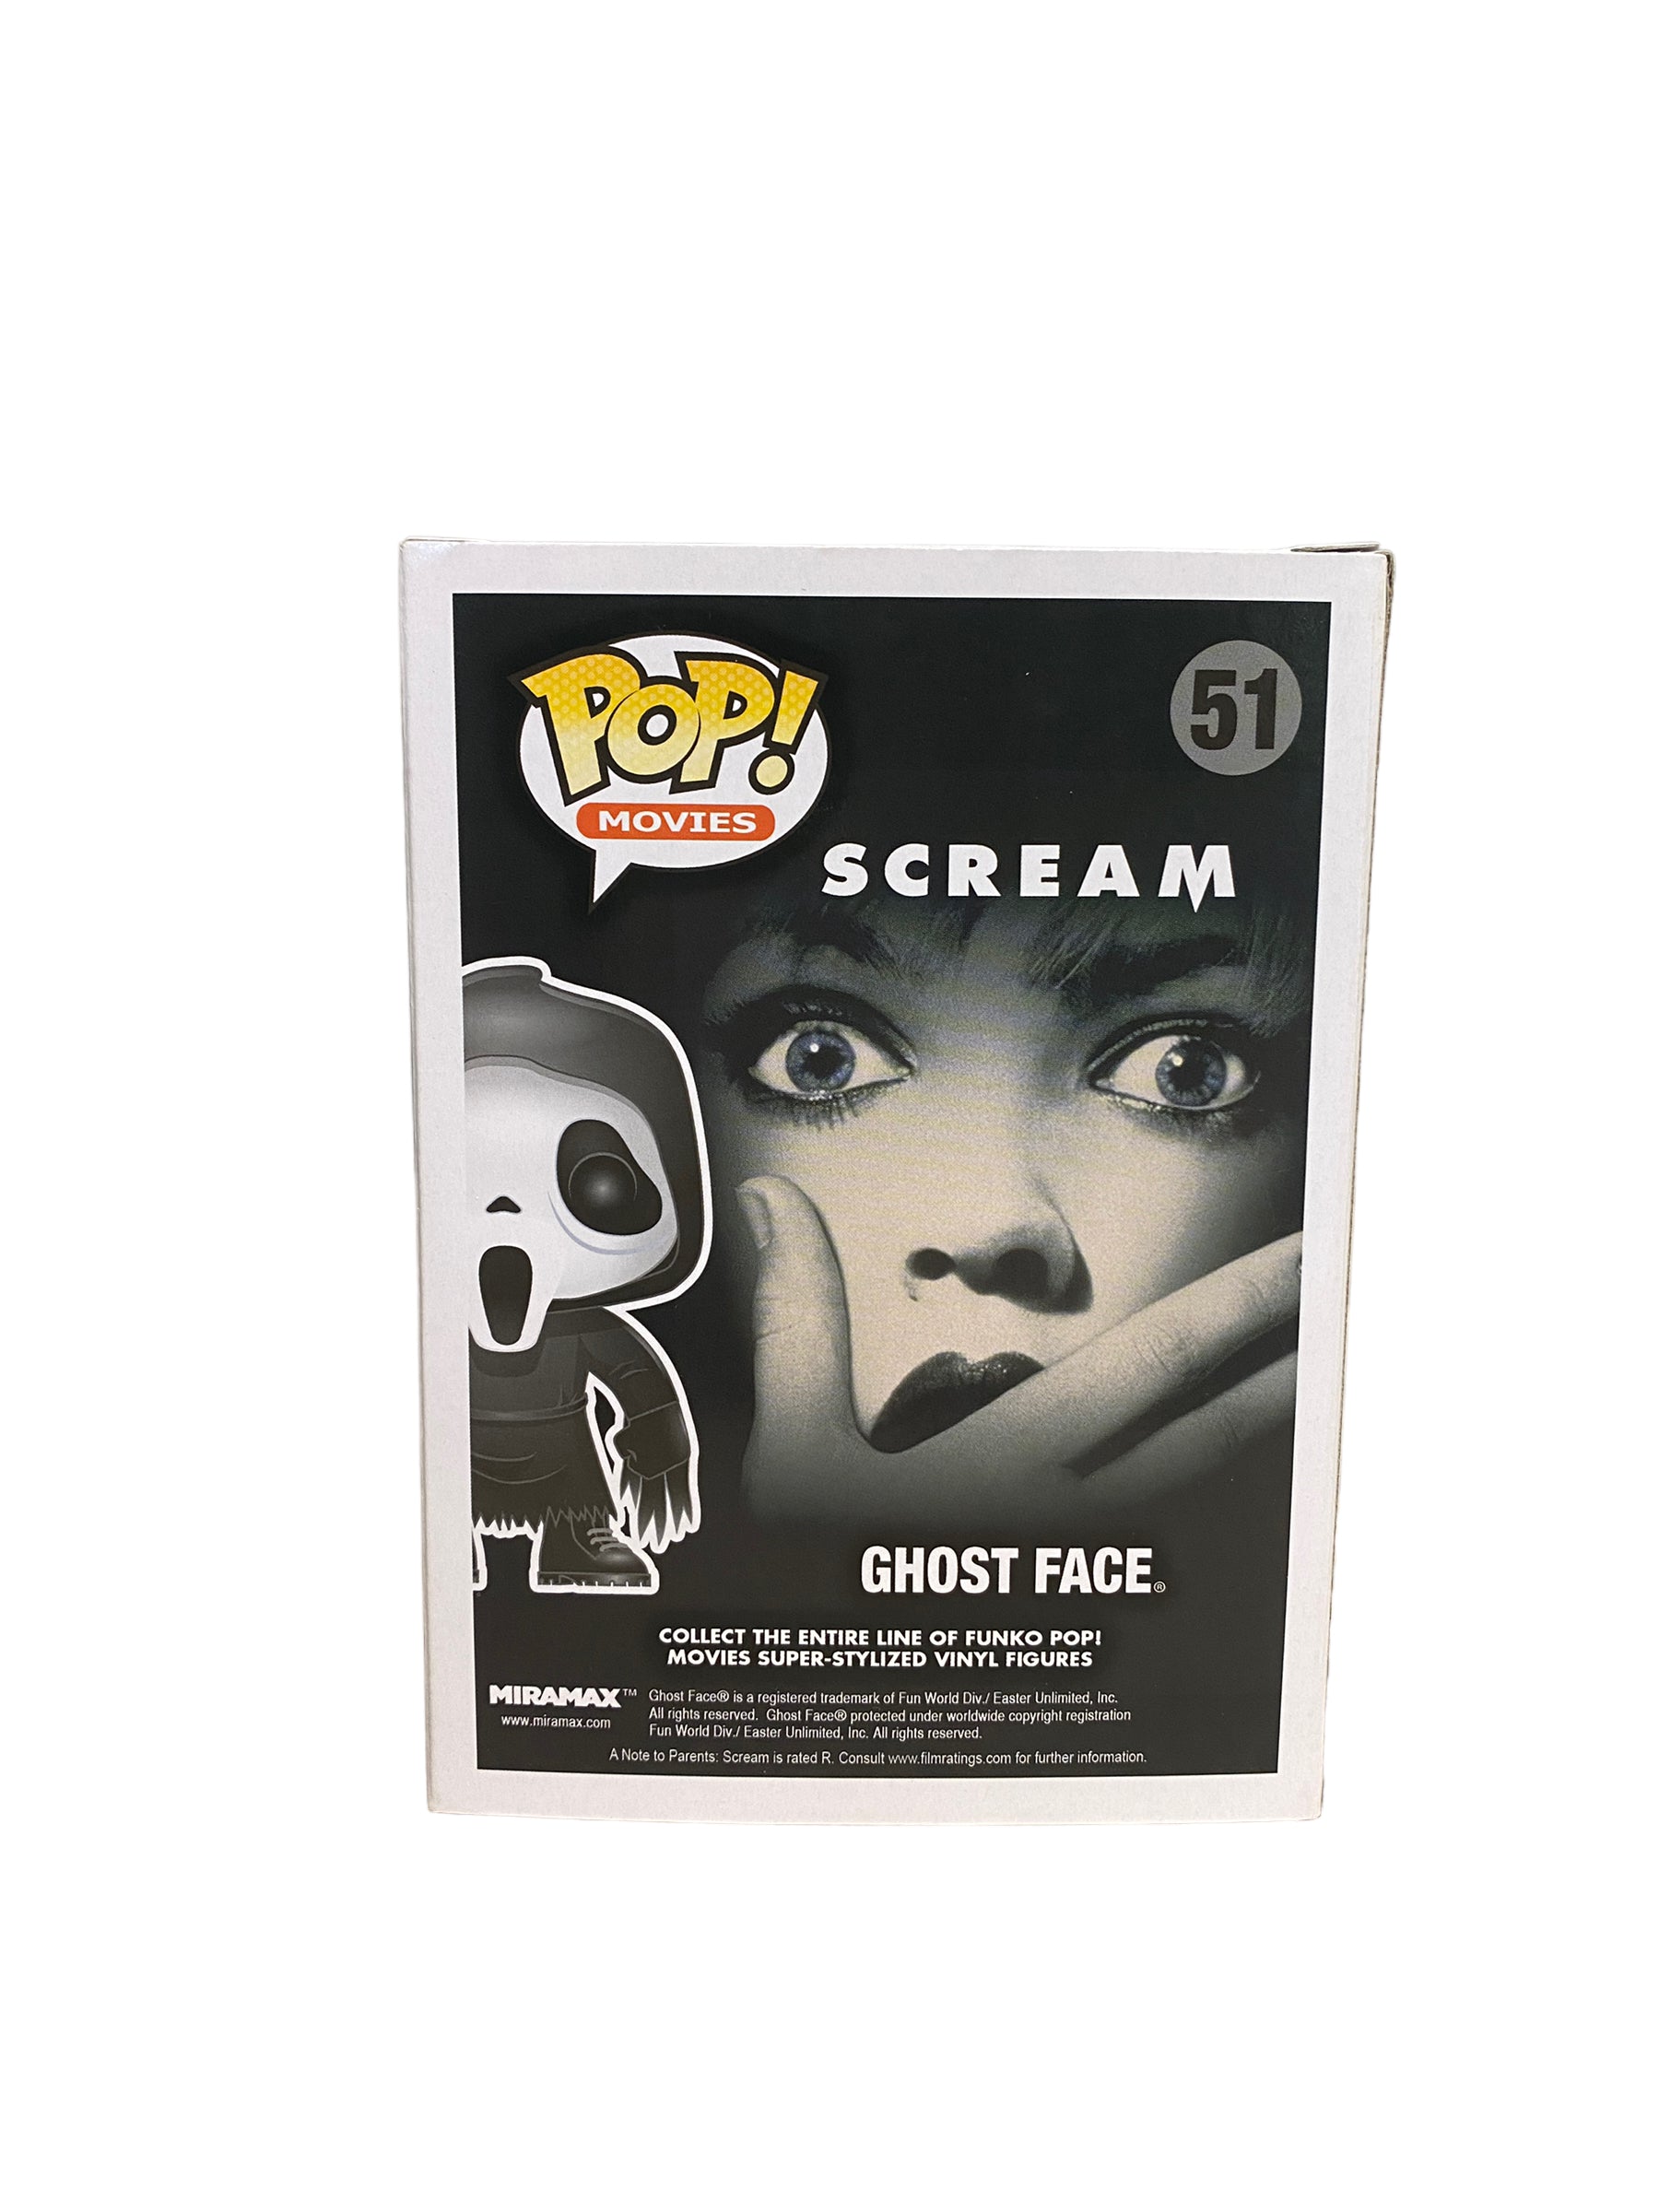 Ghost Face #51 Funko Pop! - Scream - 2017 Pop! - Condition 8.5/10